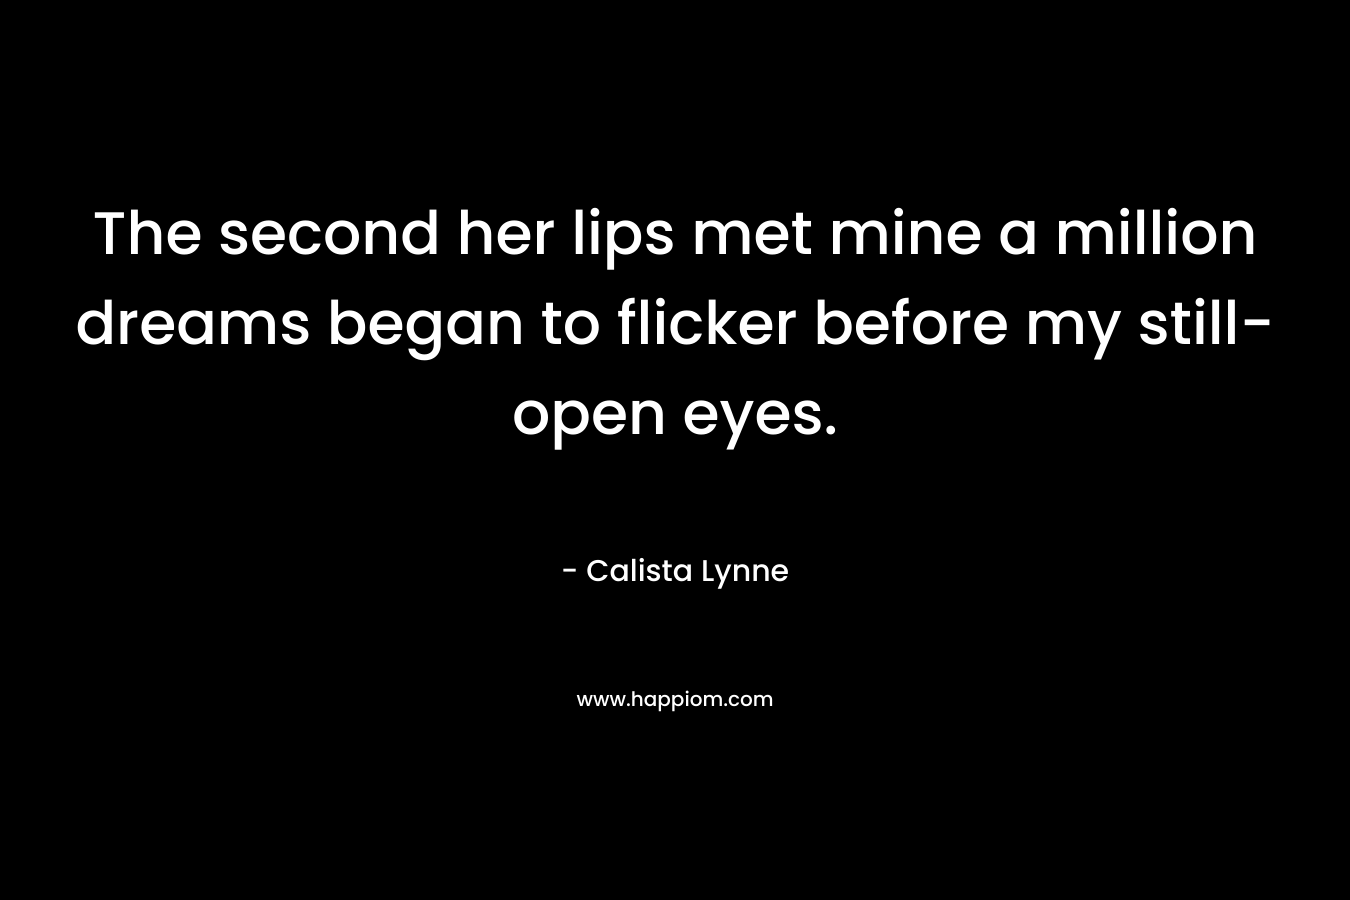 The second her lips met mine a million dreams began to flicker before my still-open eyes. – Calista Lynne